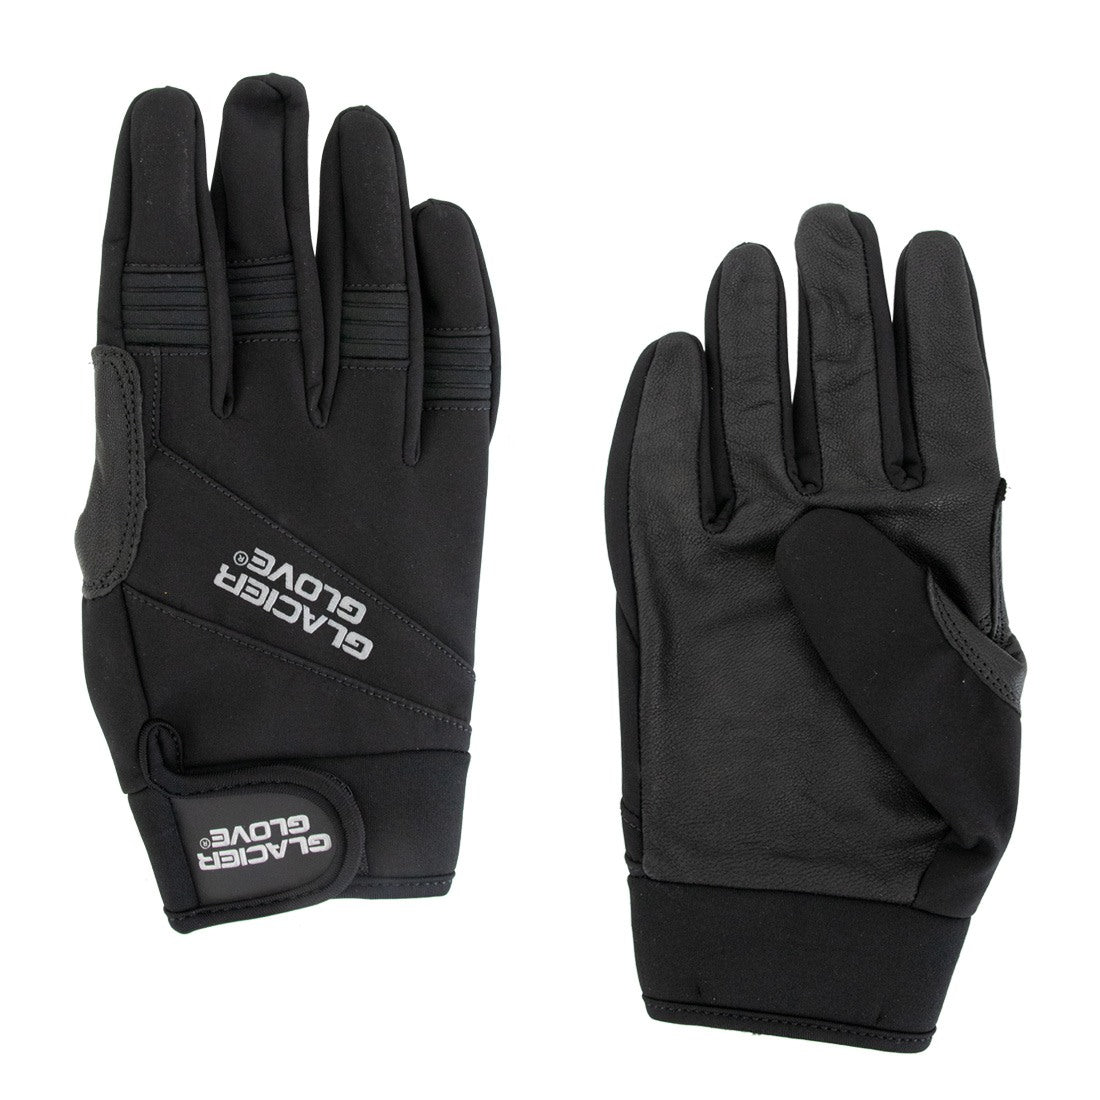 Glacier Glove Guide Gloves Side View